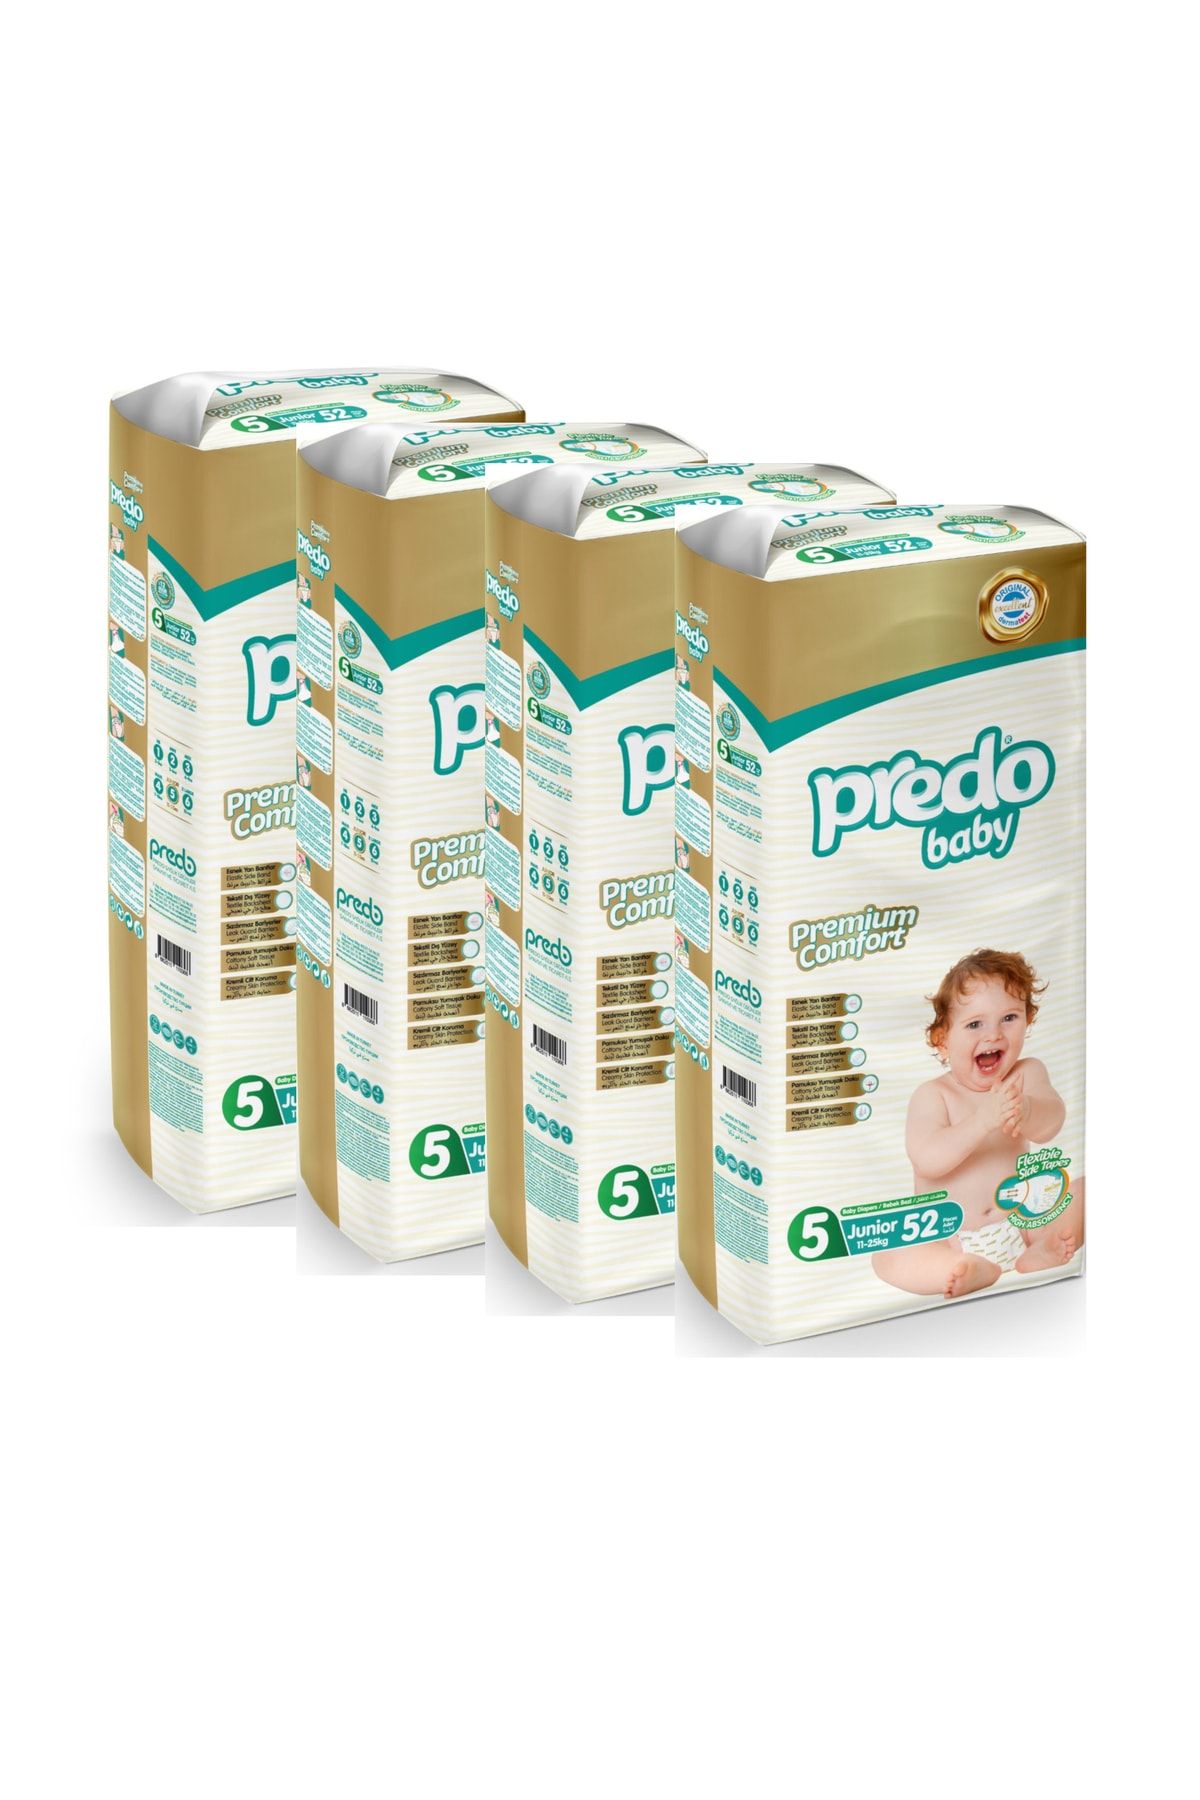 PREDO Premium Comfort Bebek Bezi 5 Numara Junior (4 LÜ SÜPER AVANTAJ PAKETİ) 208 Adet